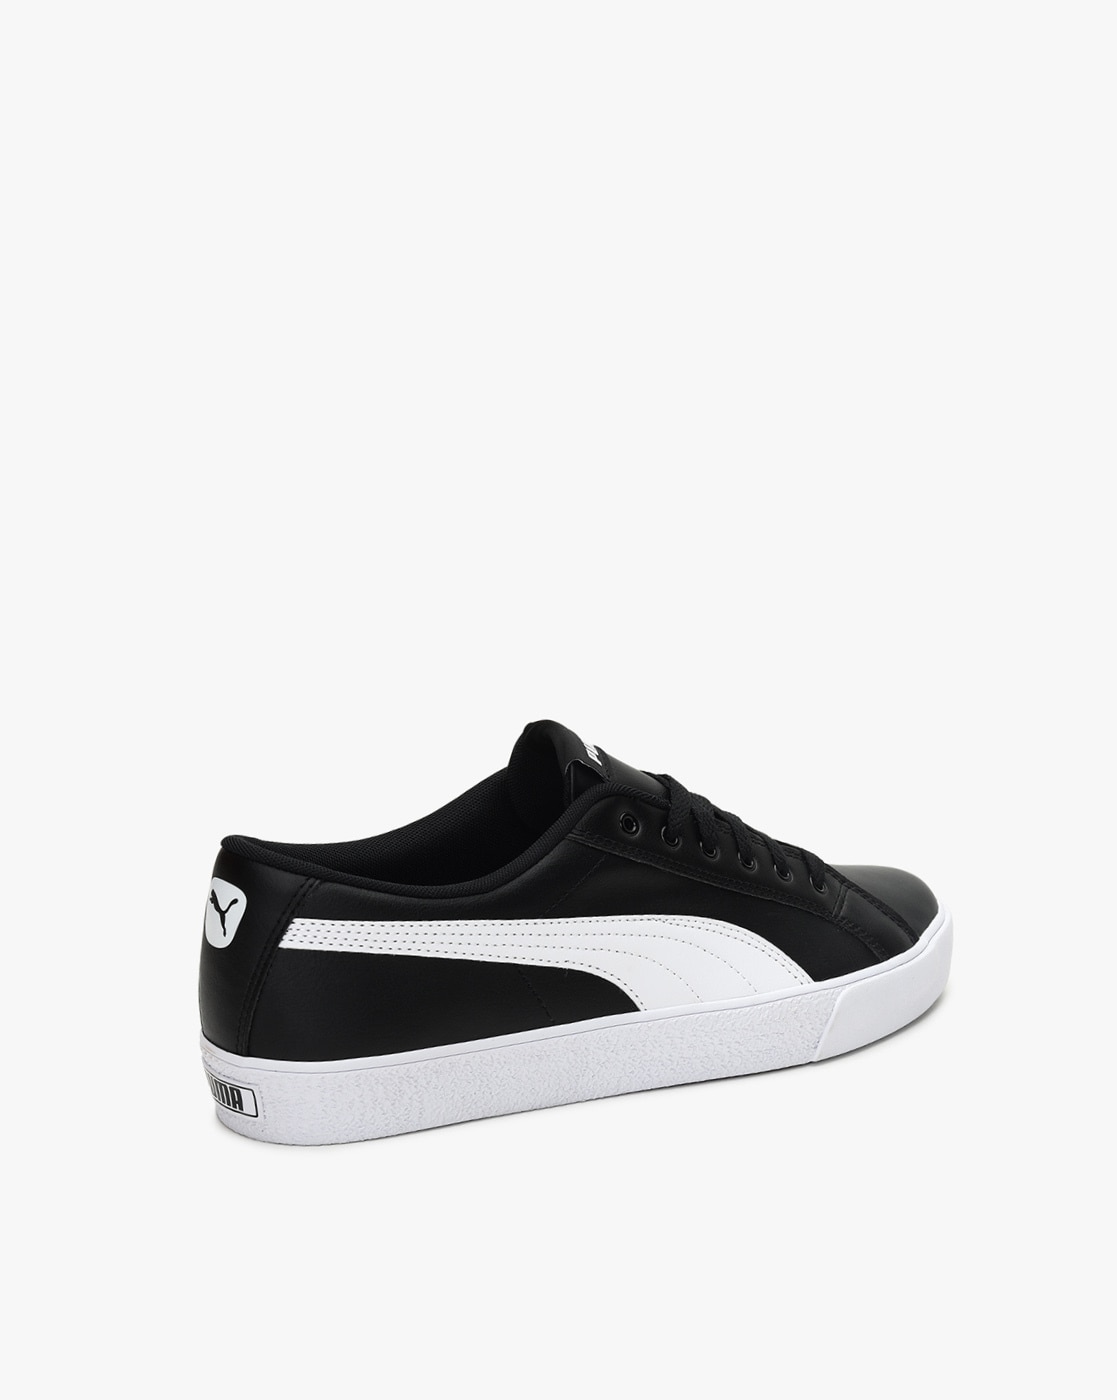 PUMA Bari Z Slipon Casual Shoes Black/White 380141-05 - KICKS CREW